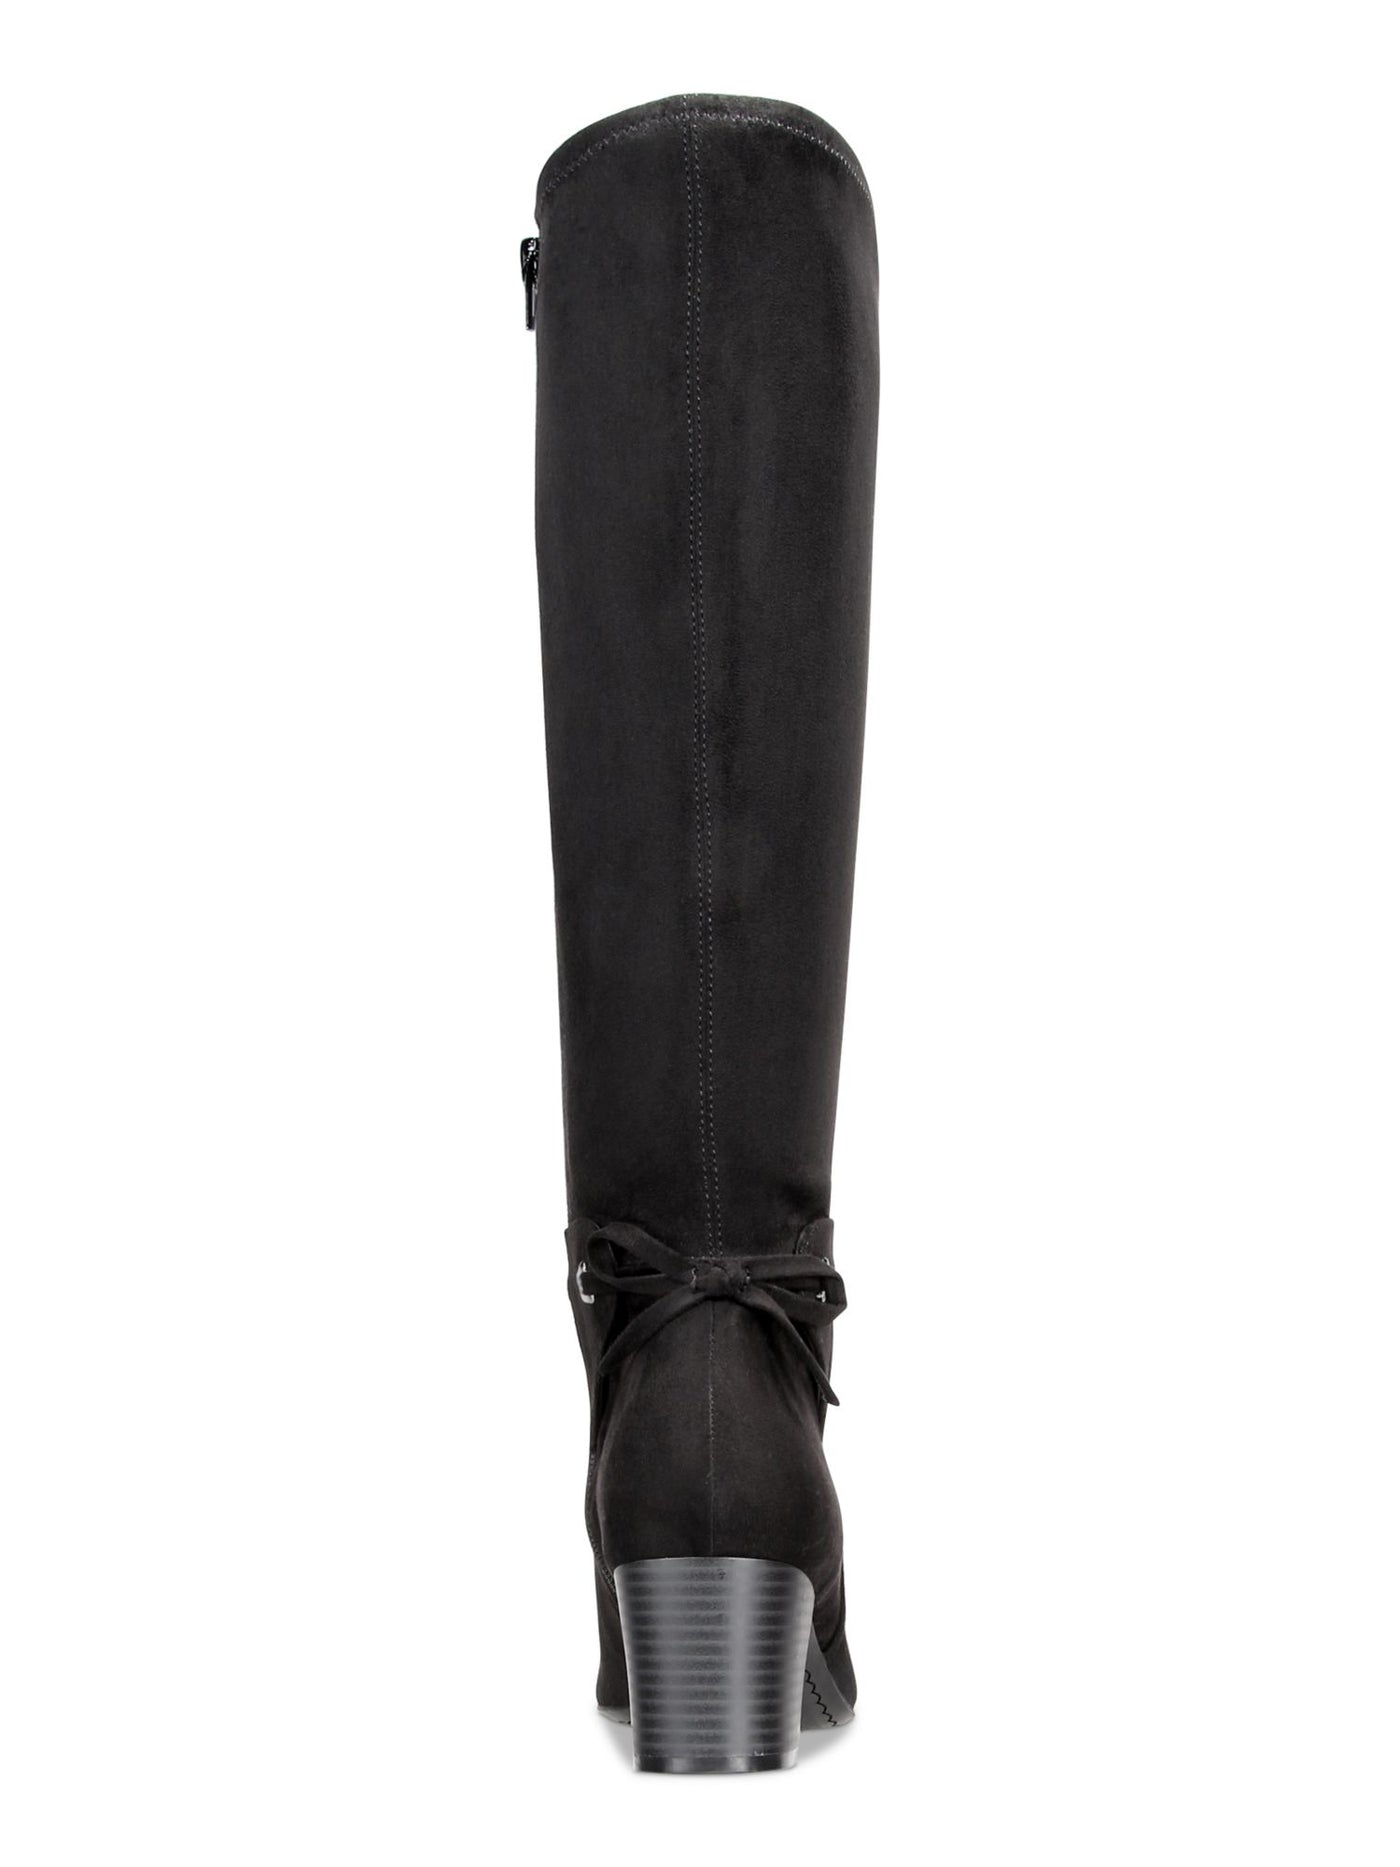 CHARTER CLUB Womens Black Metallic Hardware Slip Resistant Padded Palmaa Almond Toe Block Heel Zip-Up Boots Shoes 8.5 M